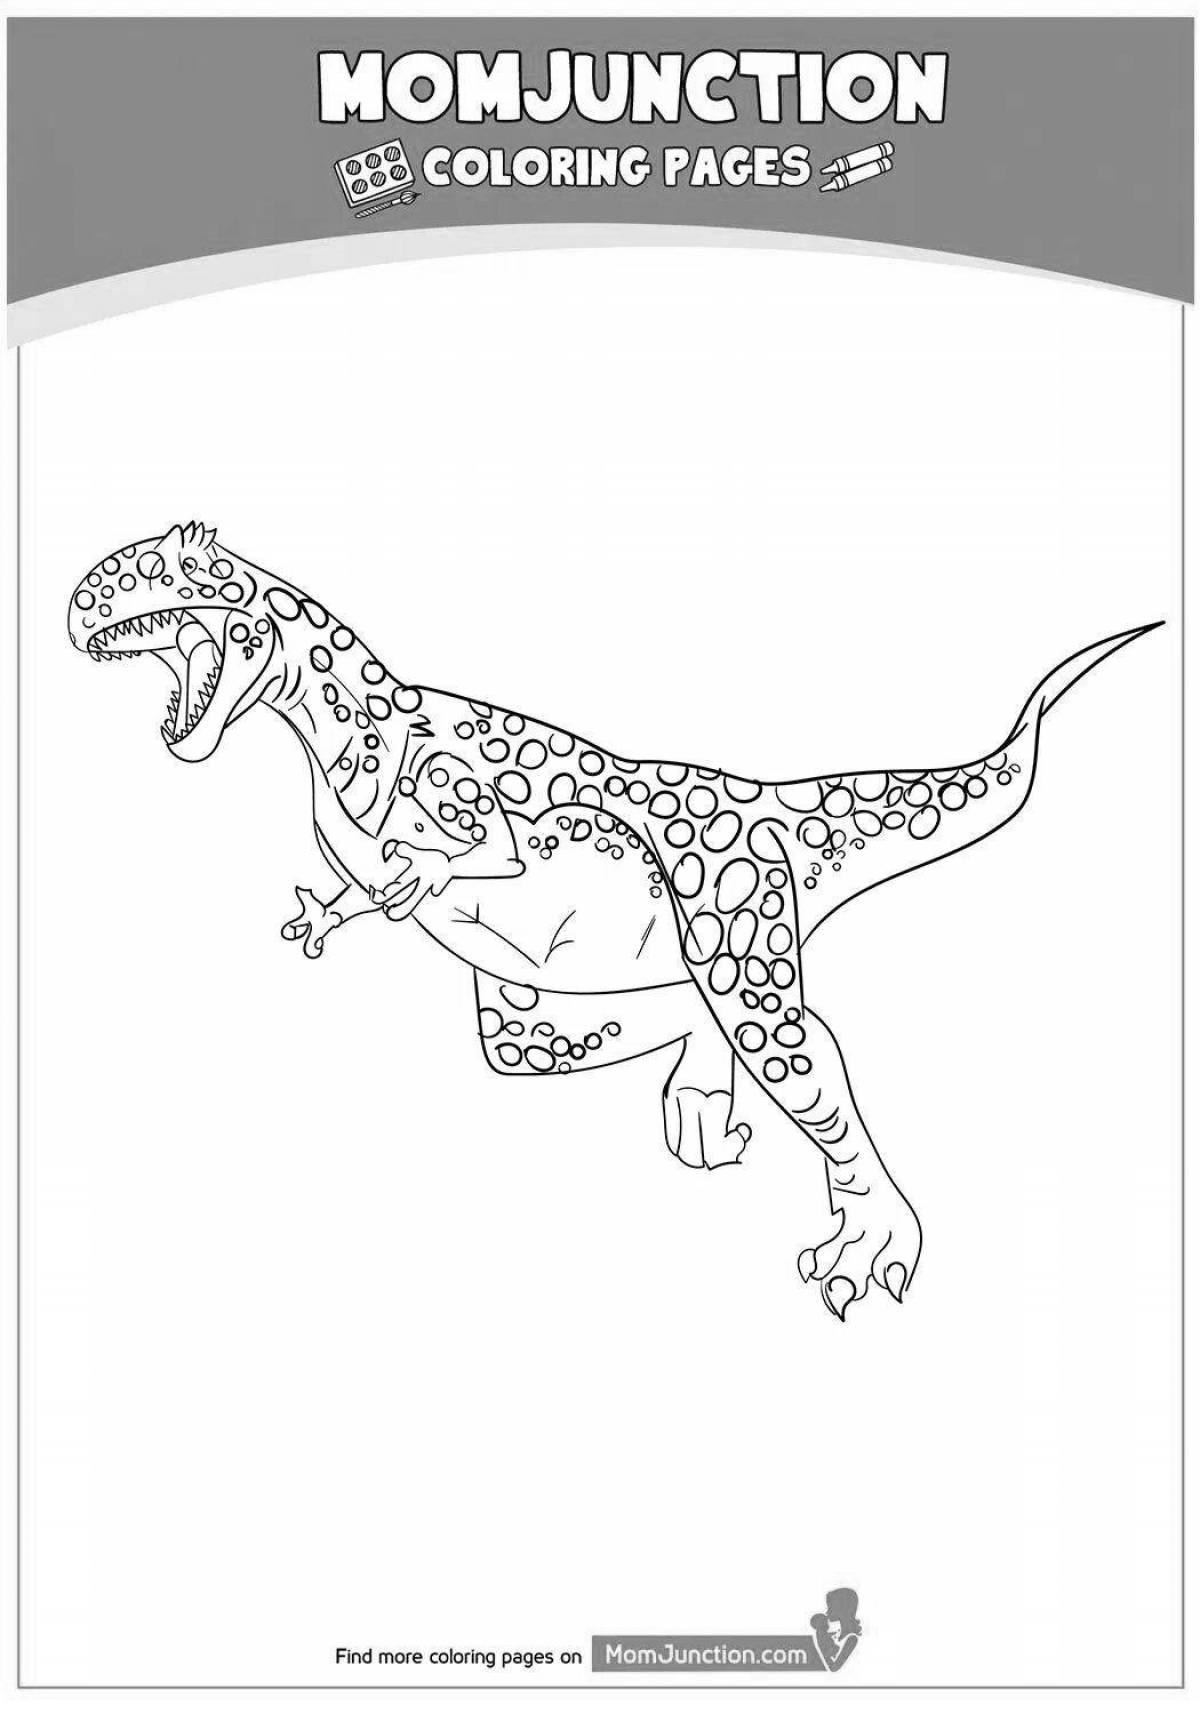 Megalosaurus fun coloring book